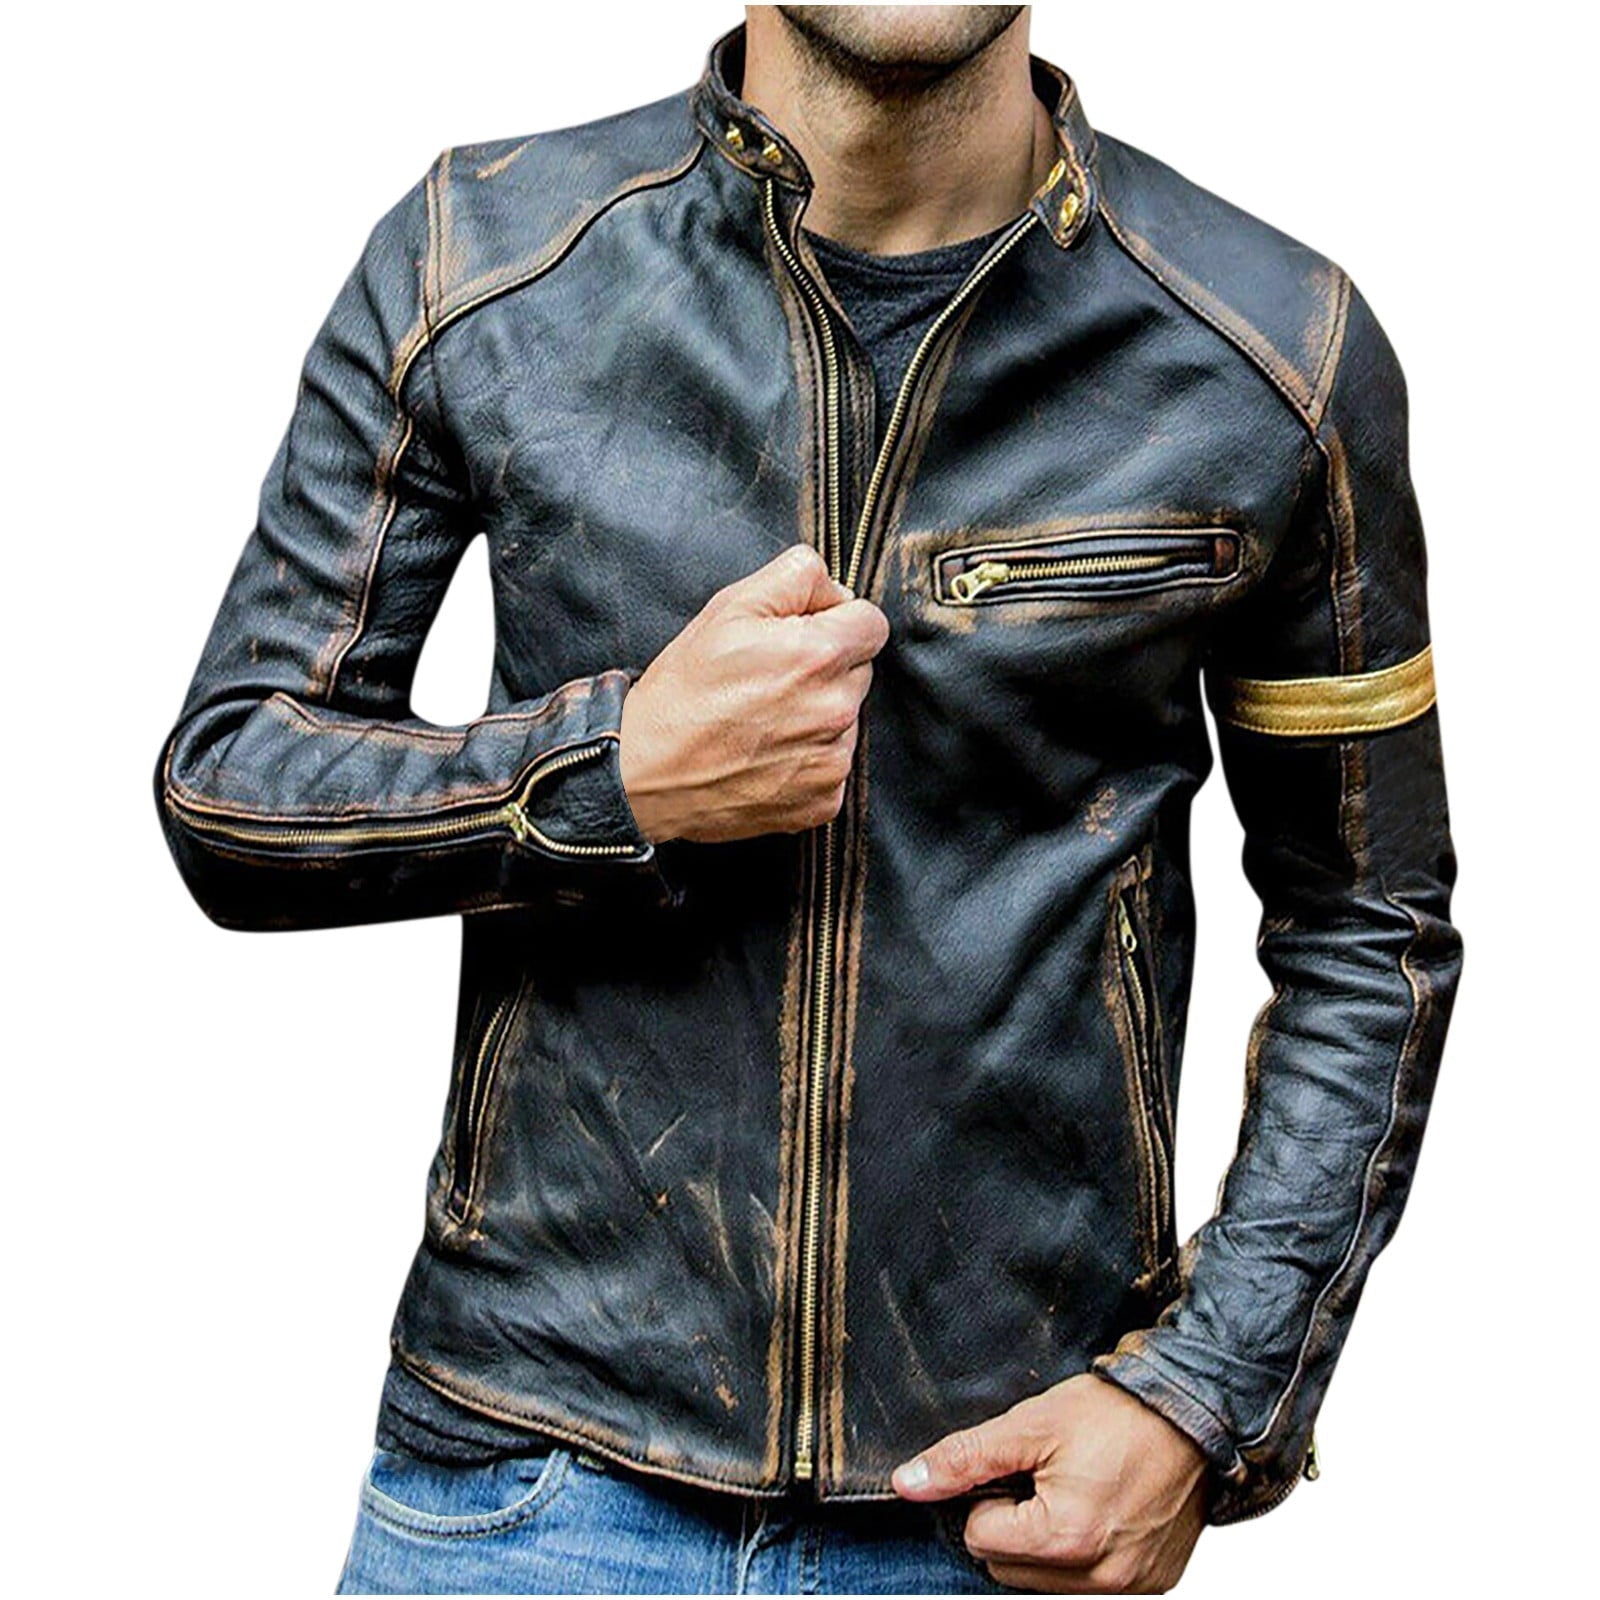 Men's Autumn Fashion Pure Color Stand Collar Imitation Leather Jacket Coat